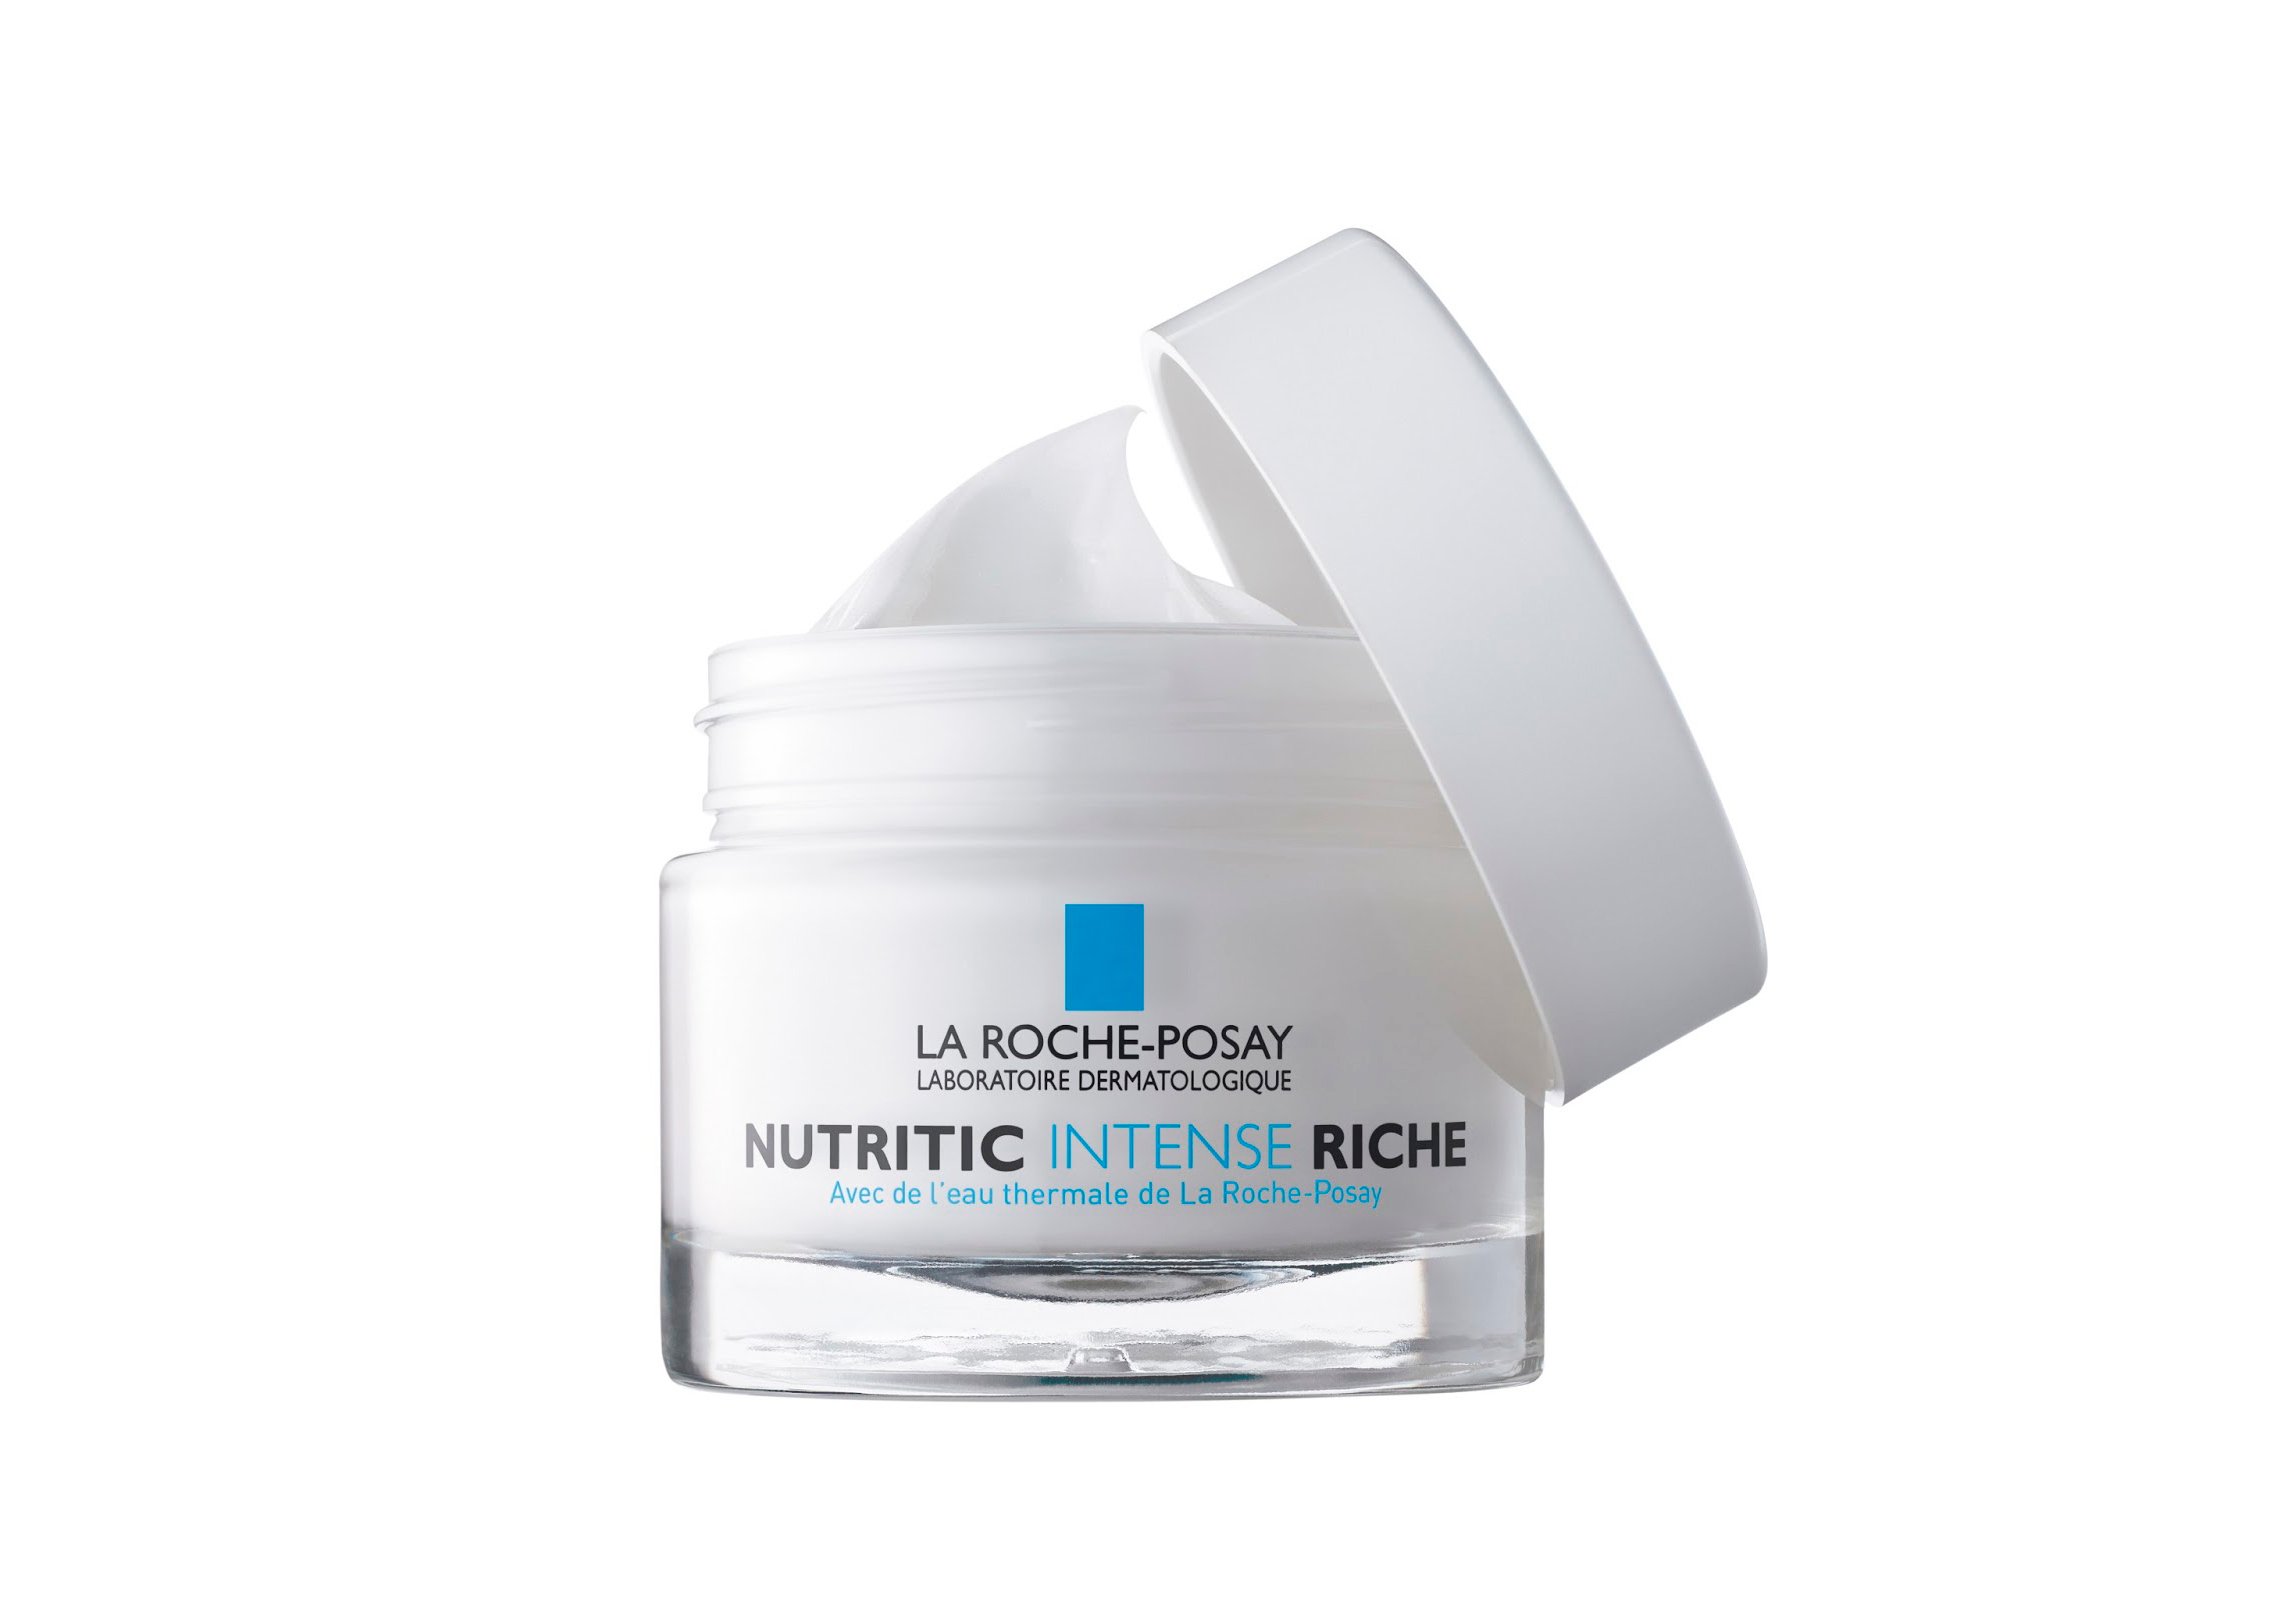 Nutritic Intense Riche Крем для глубокого восстановления кожи, La Roche-Posay